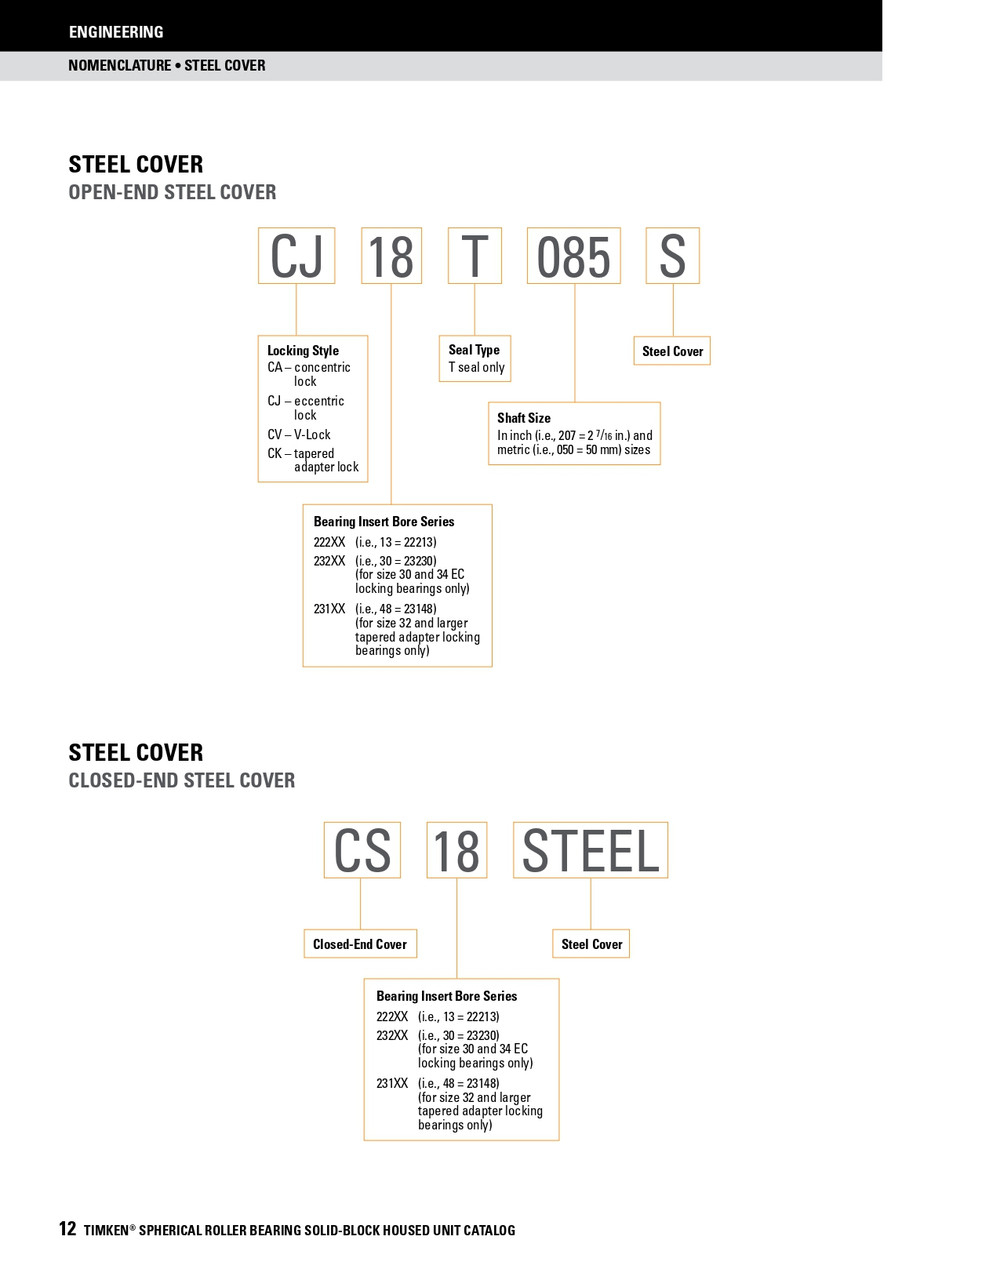 7" Timken SRB Steel Open End Cover w/Teflon Seal - Timken Eccentric Lock Type  CJ34T700S